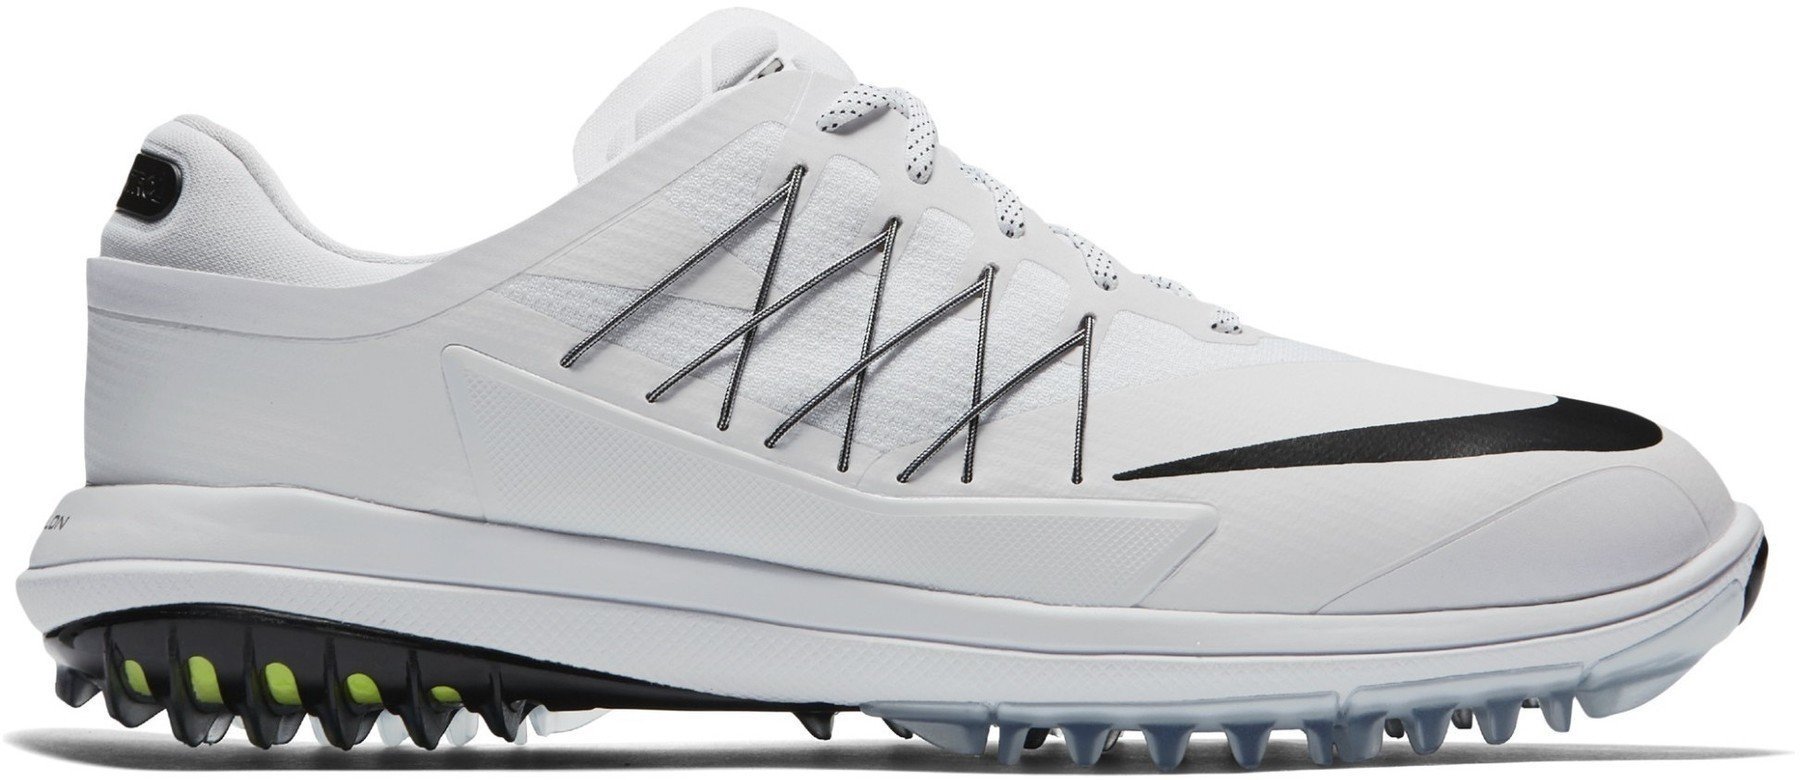 Men's golf shoes Nike Lunar Control Vapor Mens Golf Shoes White US 9